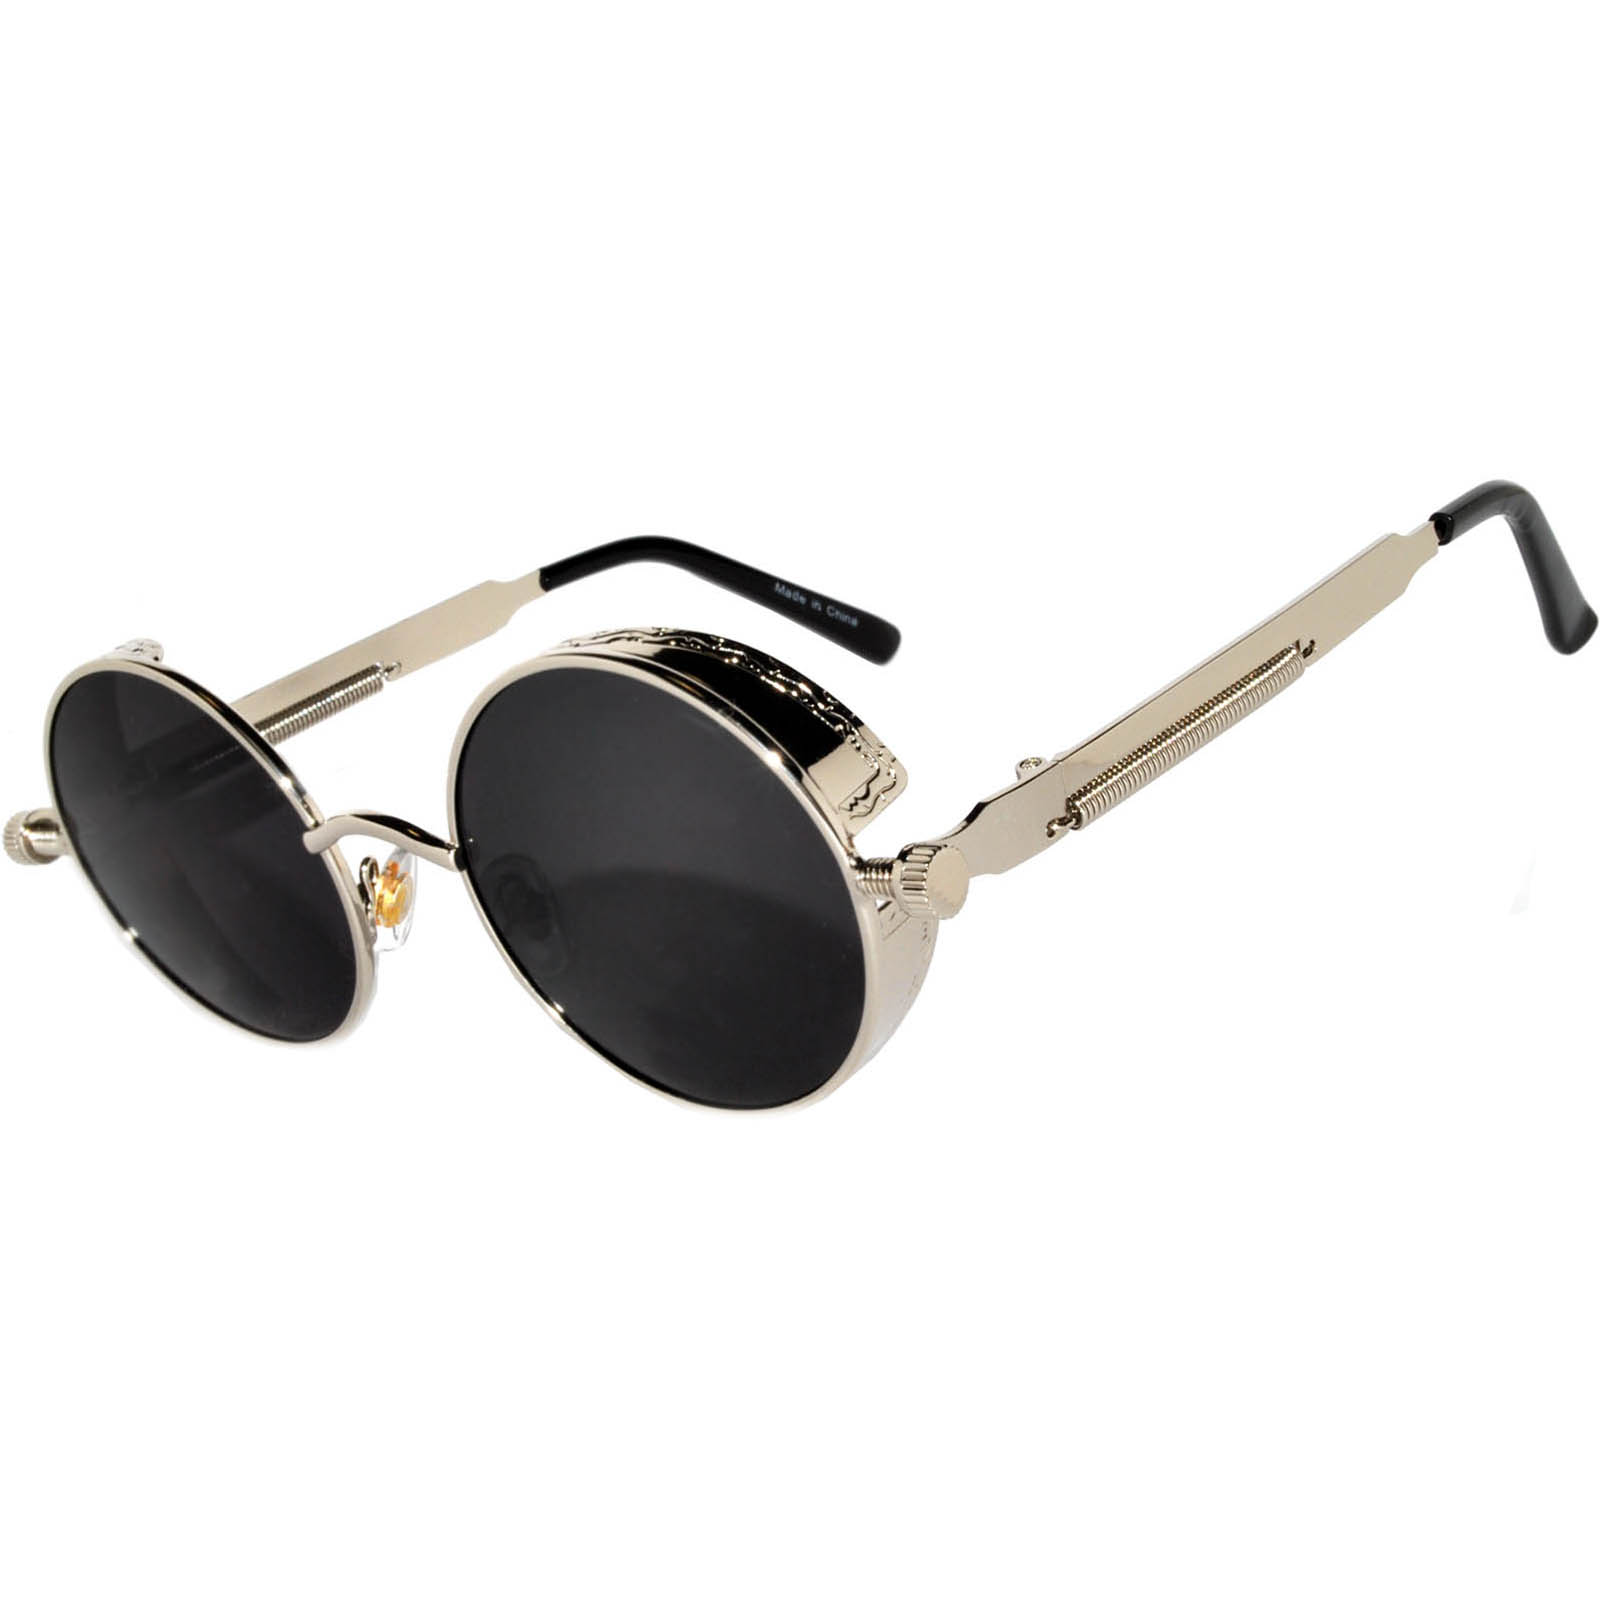 060 C11 Steampunk Gothic Sunglasses Metal Round Circle Silver Frame Black Lens One Pair Online